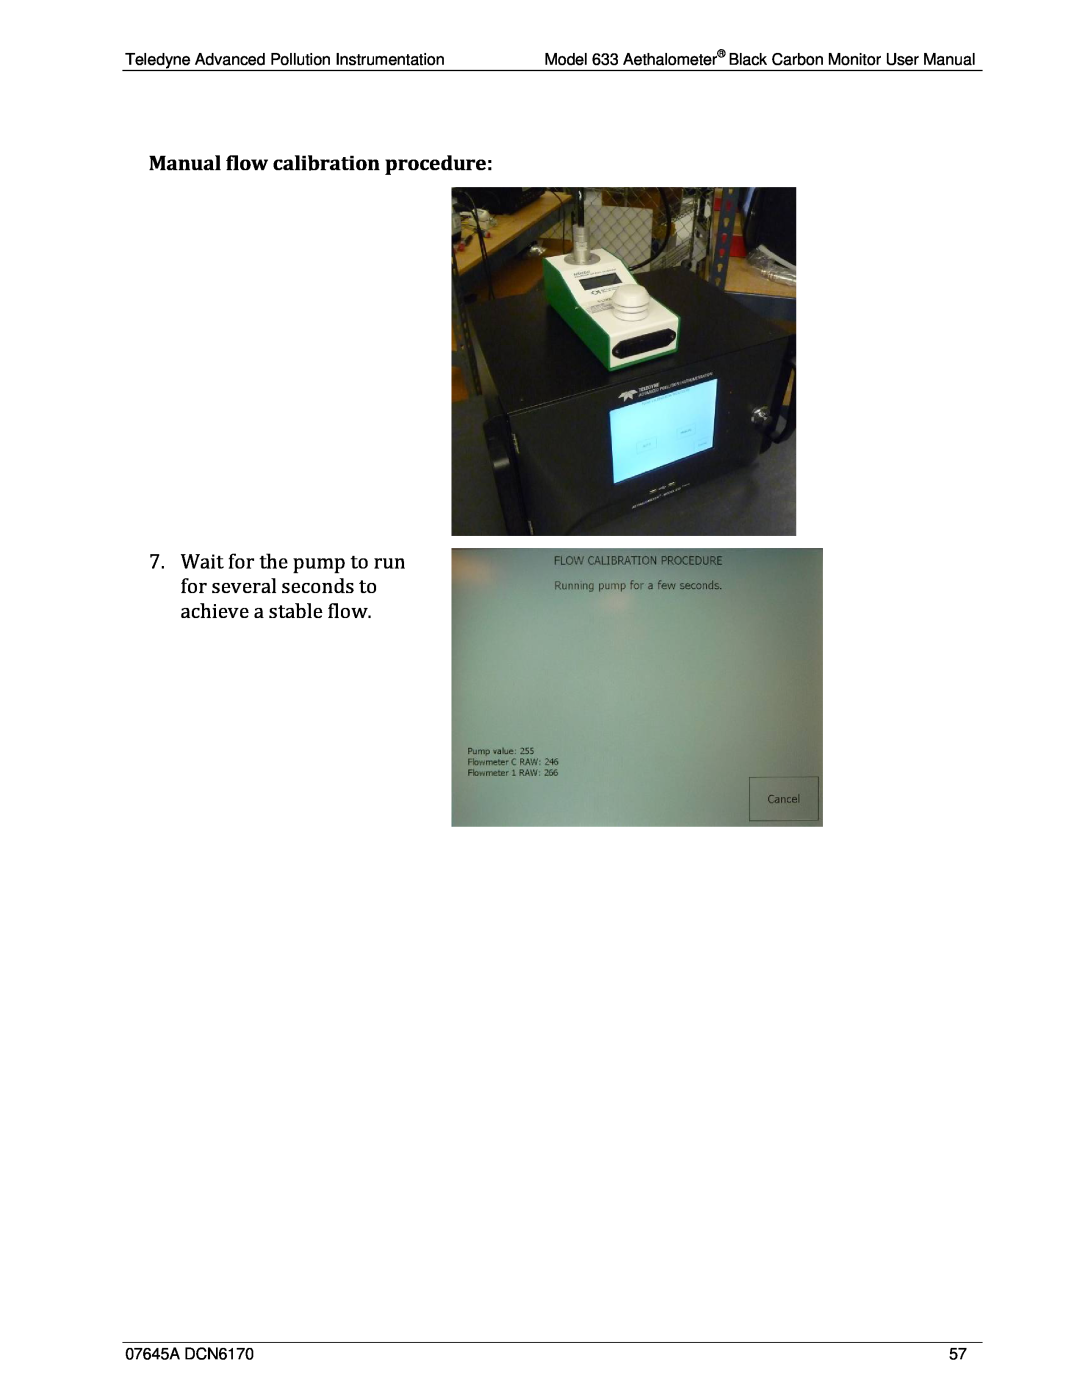 Teledyne 633 user manual Teledyne Advanced Pollution Instrumentation, 07645A DCN6170 